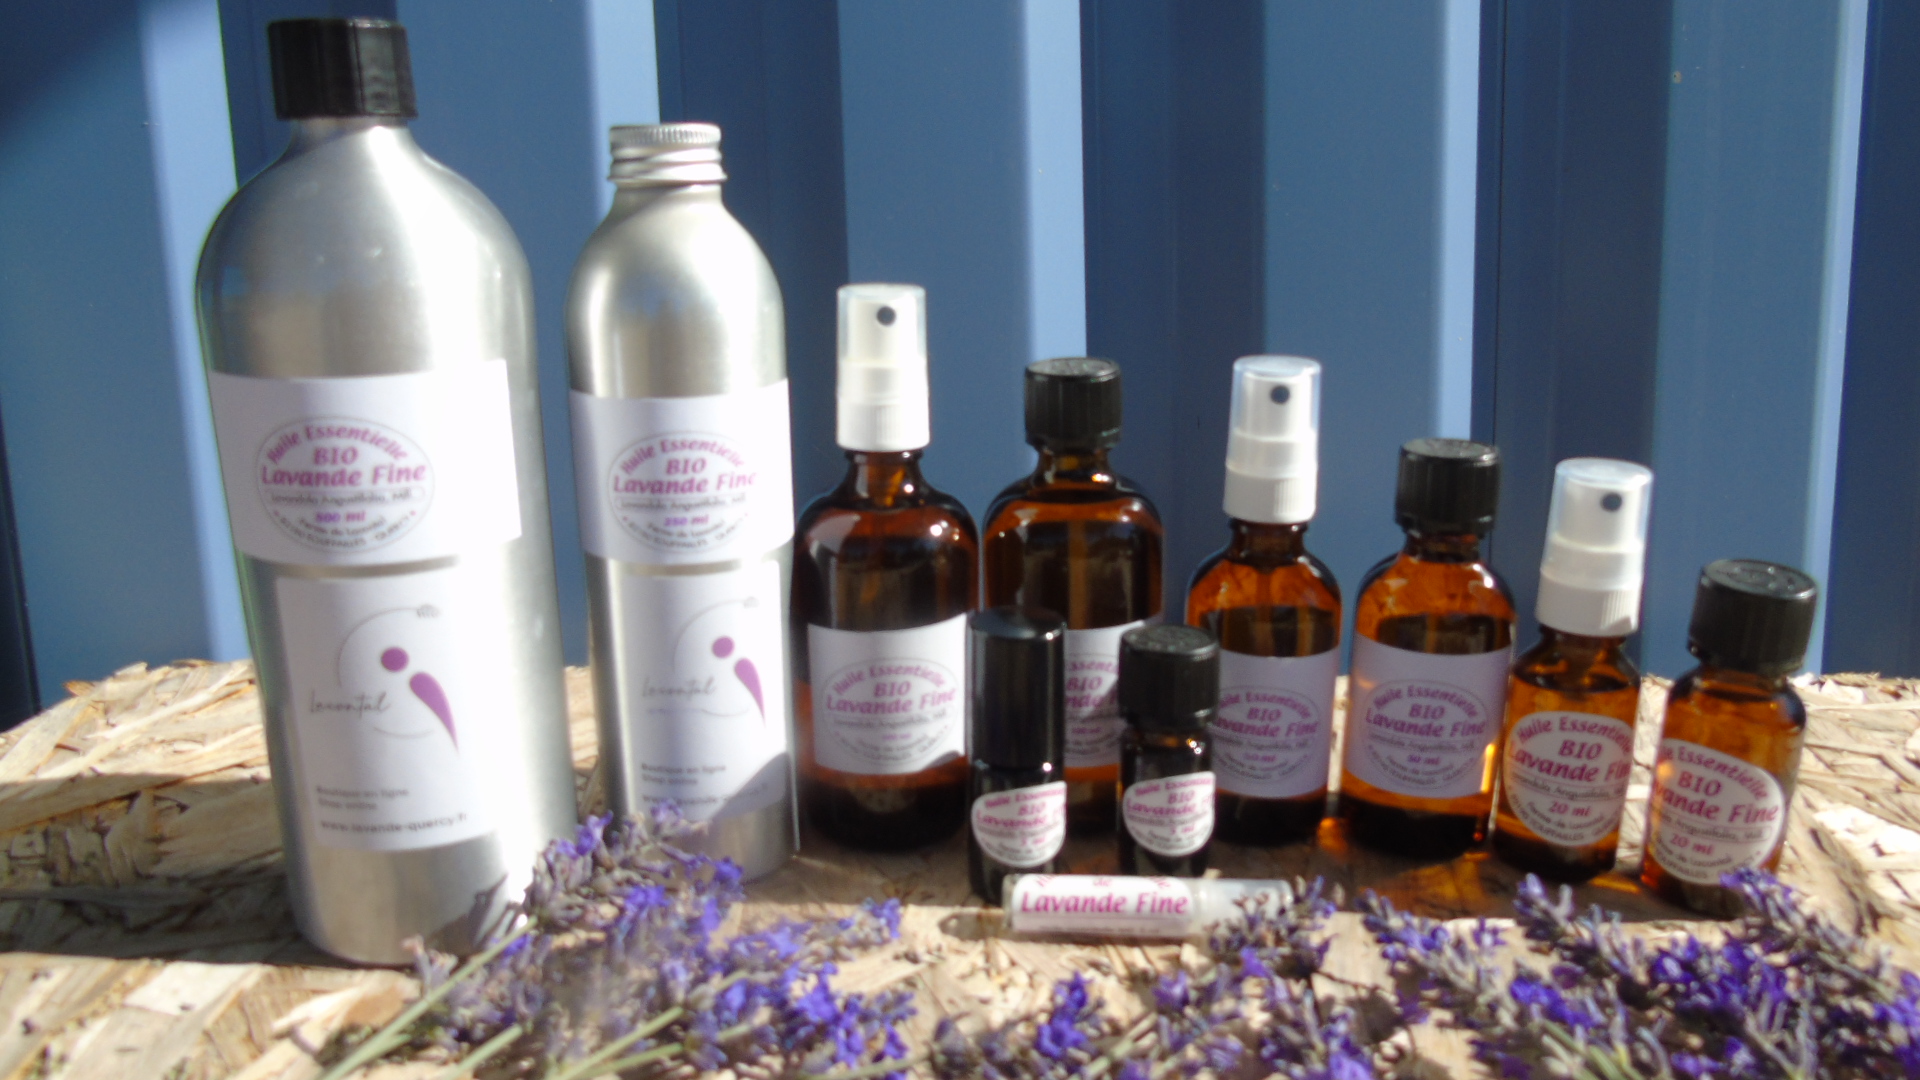 Organic fine lavender essential oil